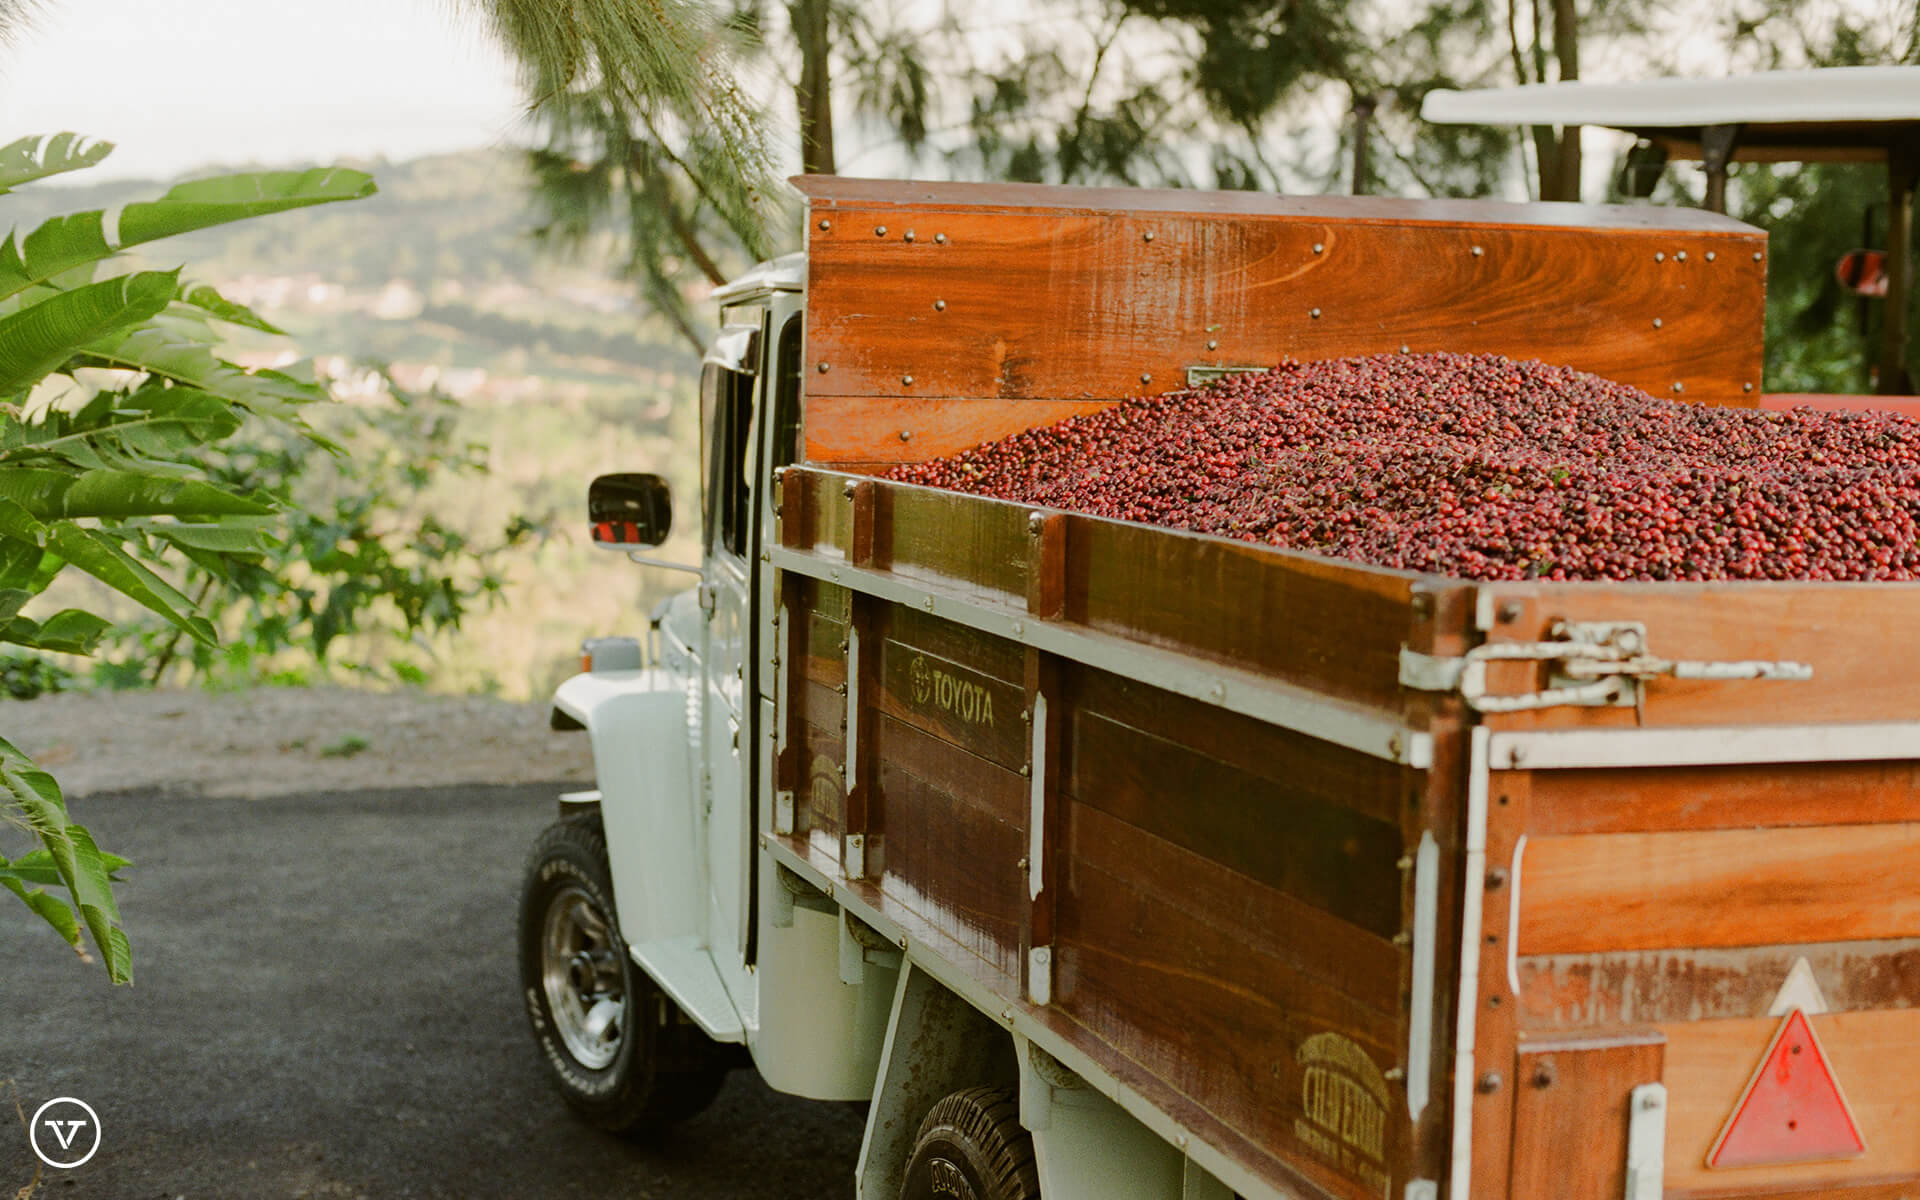 Truck transporting coffee cherries in Costa Rica.